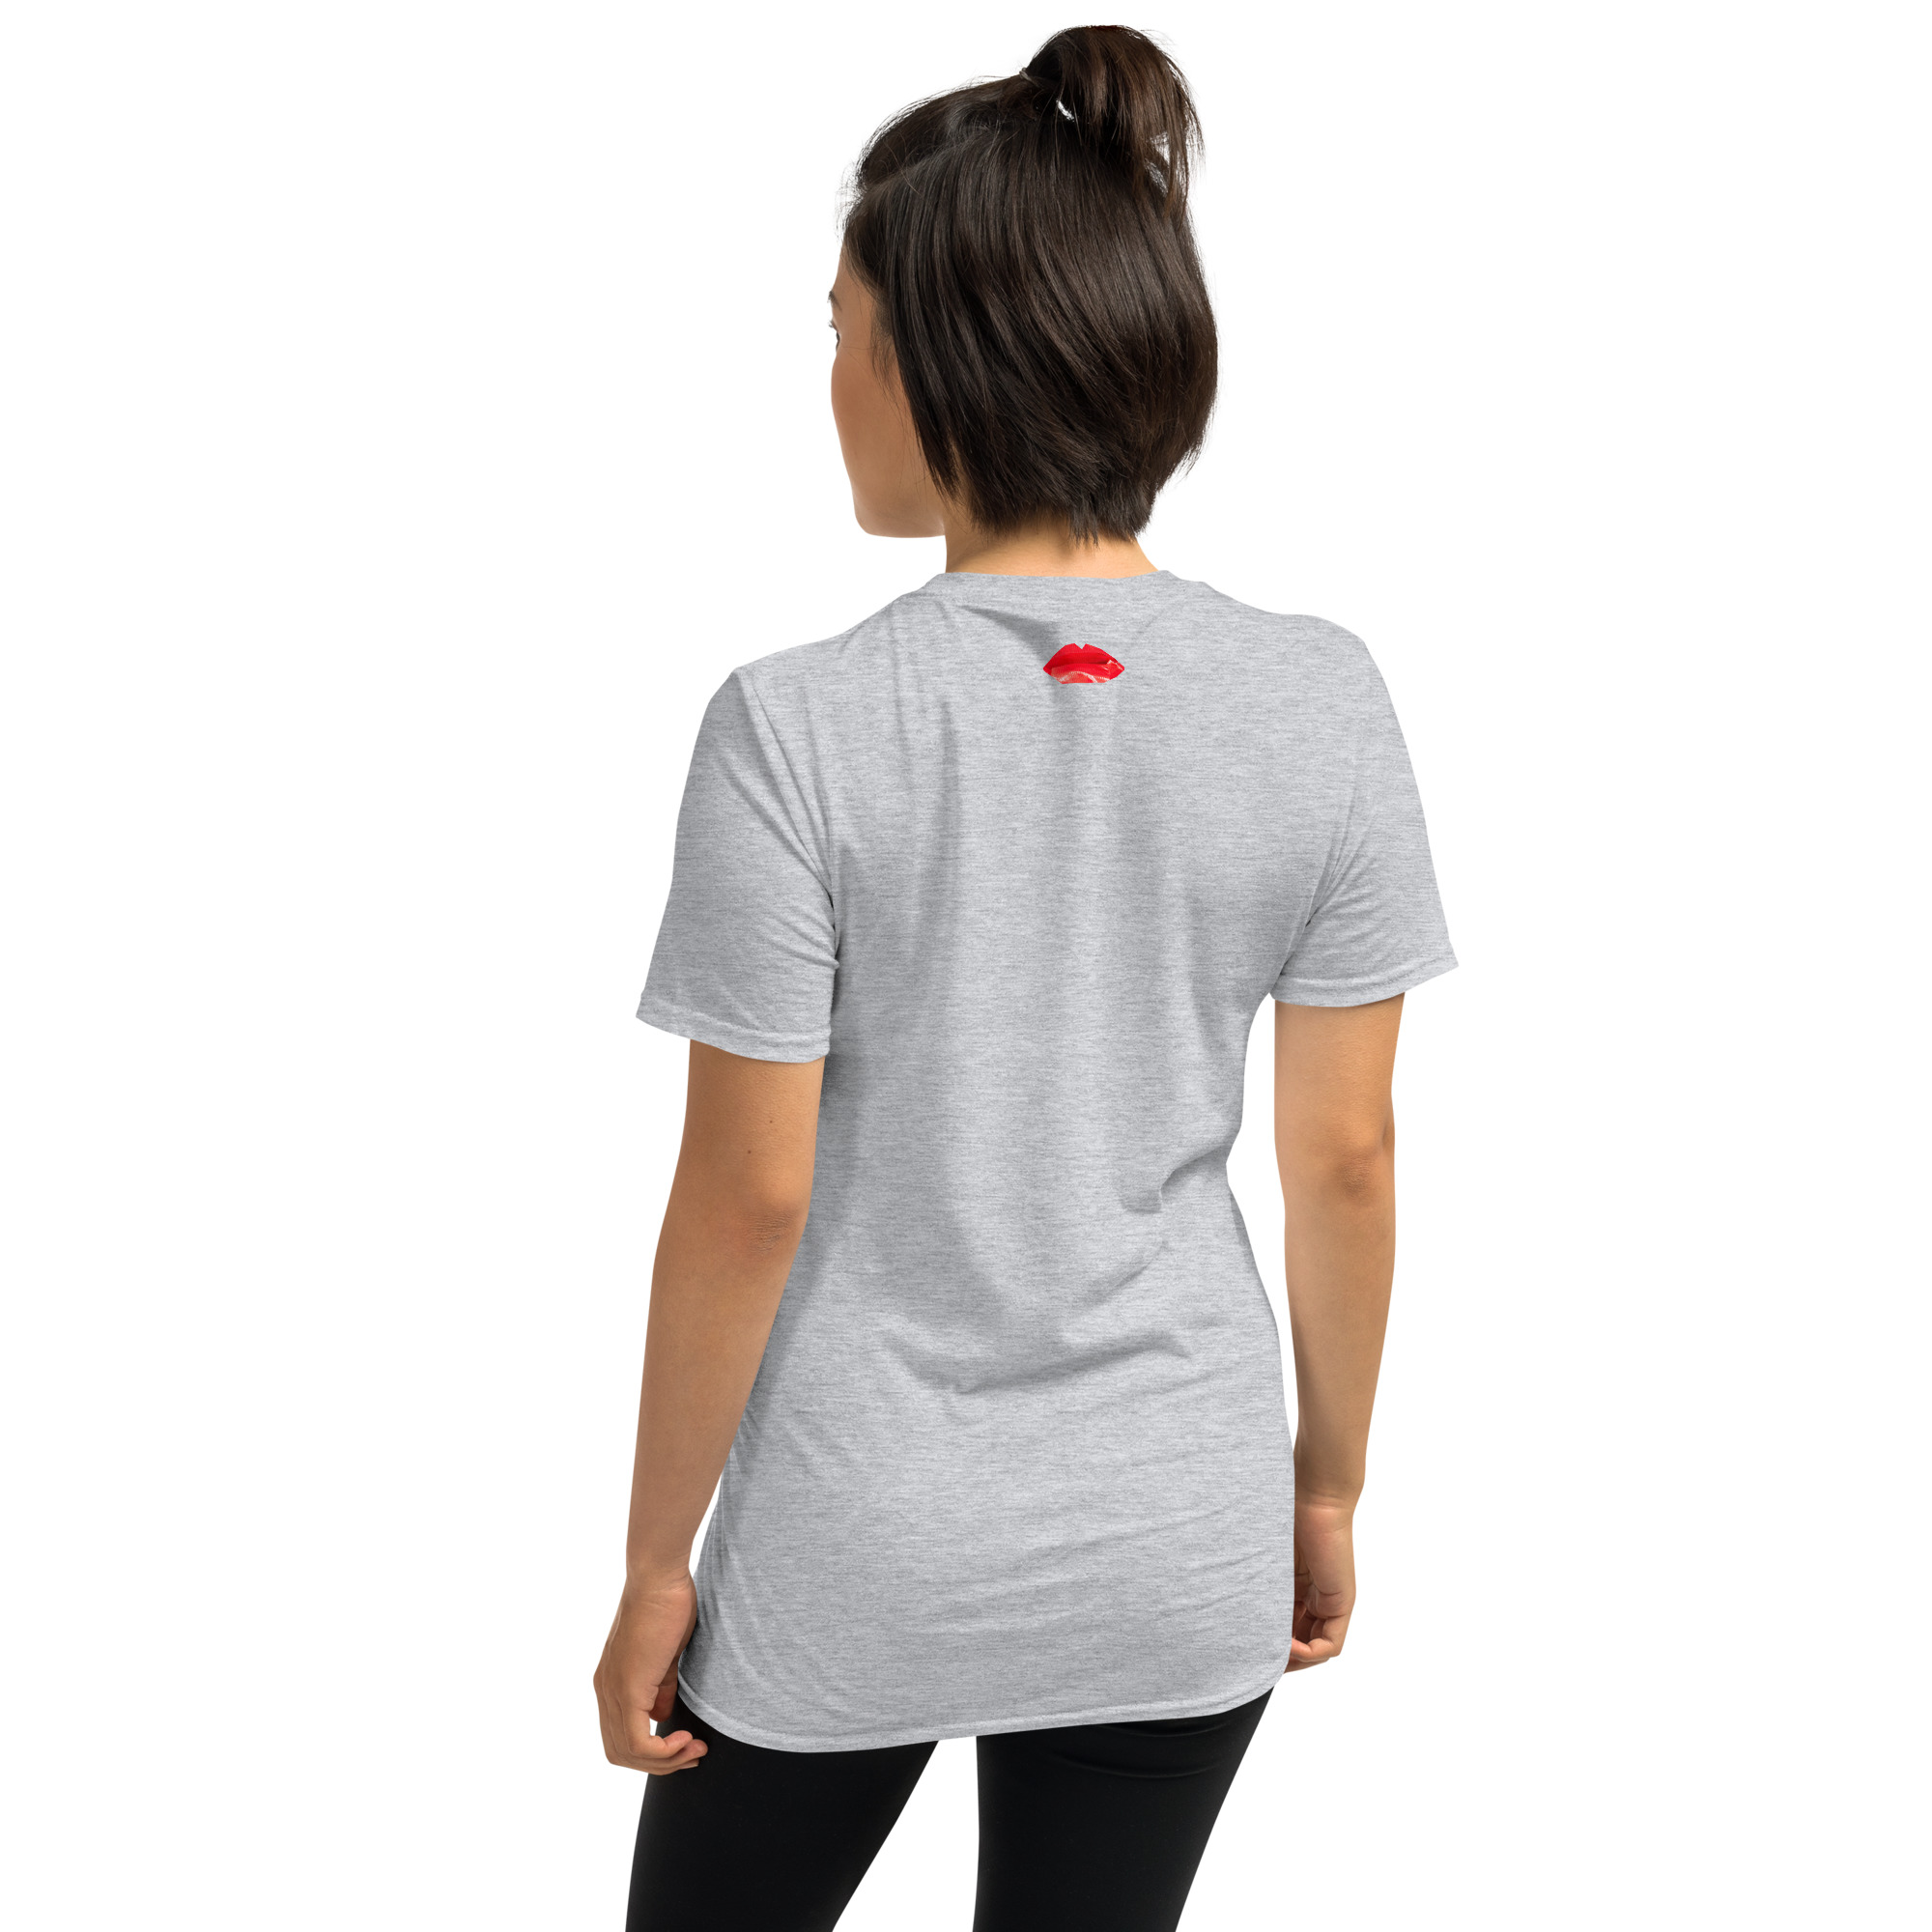 unisex-basic-softstyle-t-shirt-sport-grey-back-6363eb3023a8b.jpg